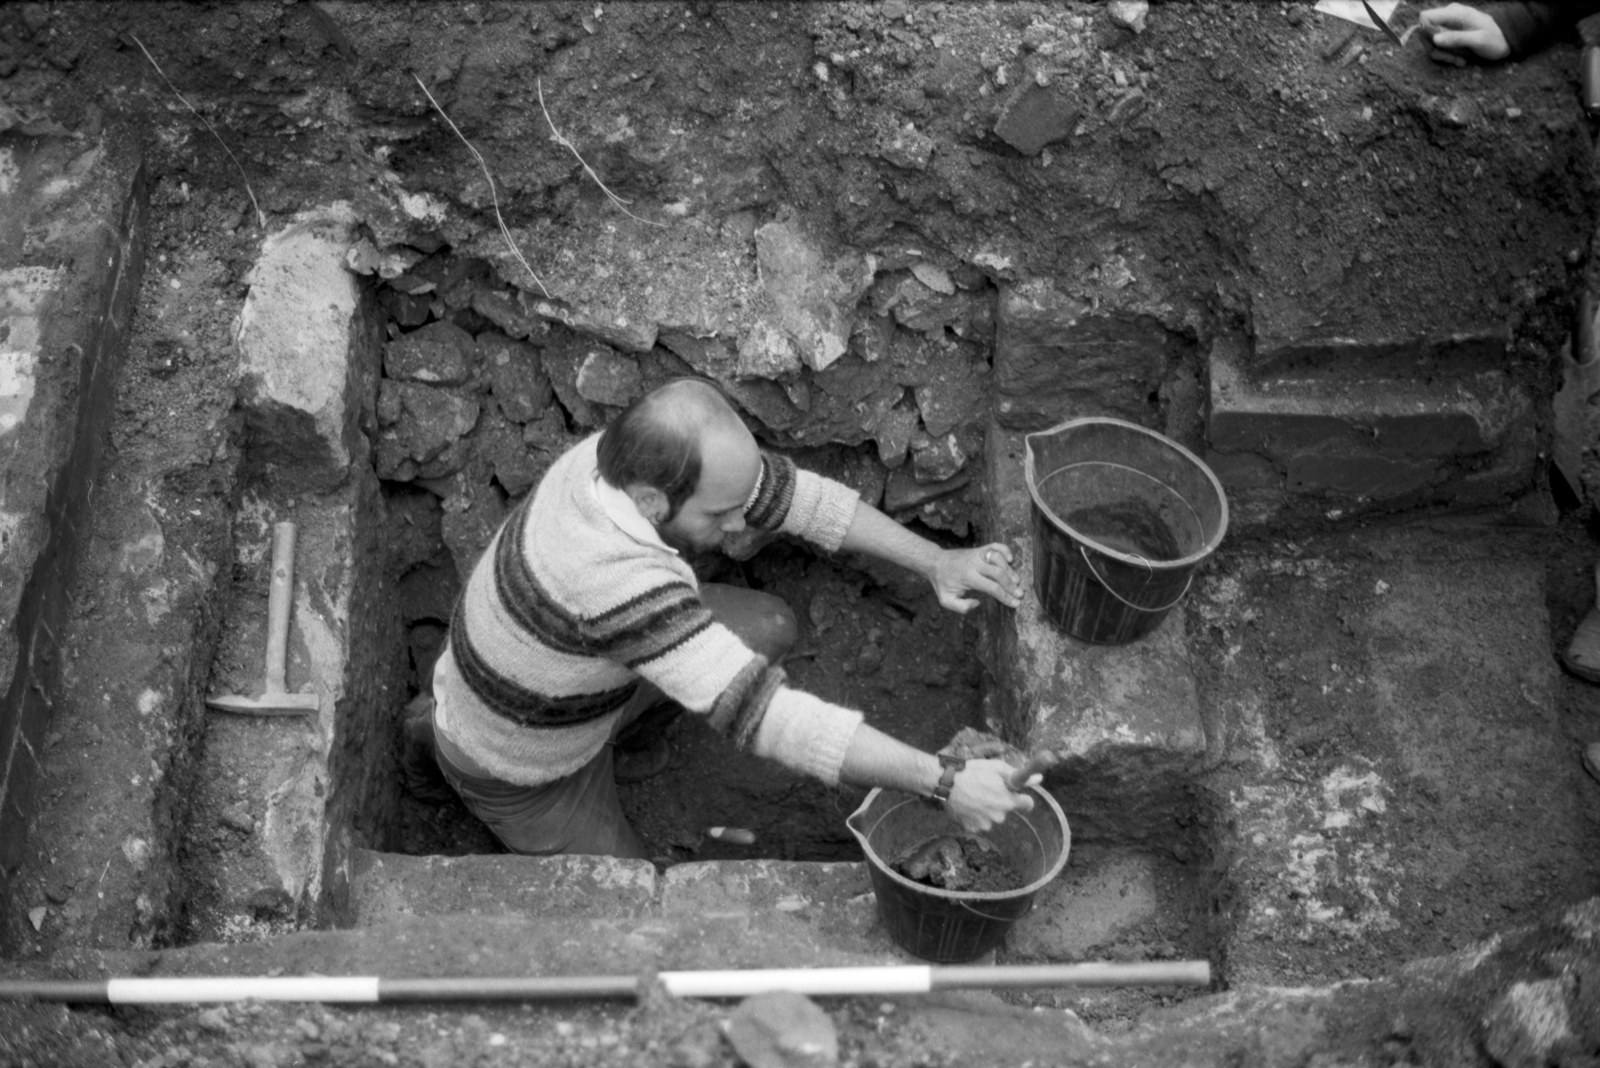 Archaeologist Dani Petocz excavating at Hyde Park Barracks, 1981.